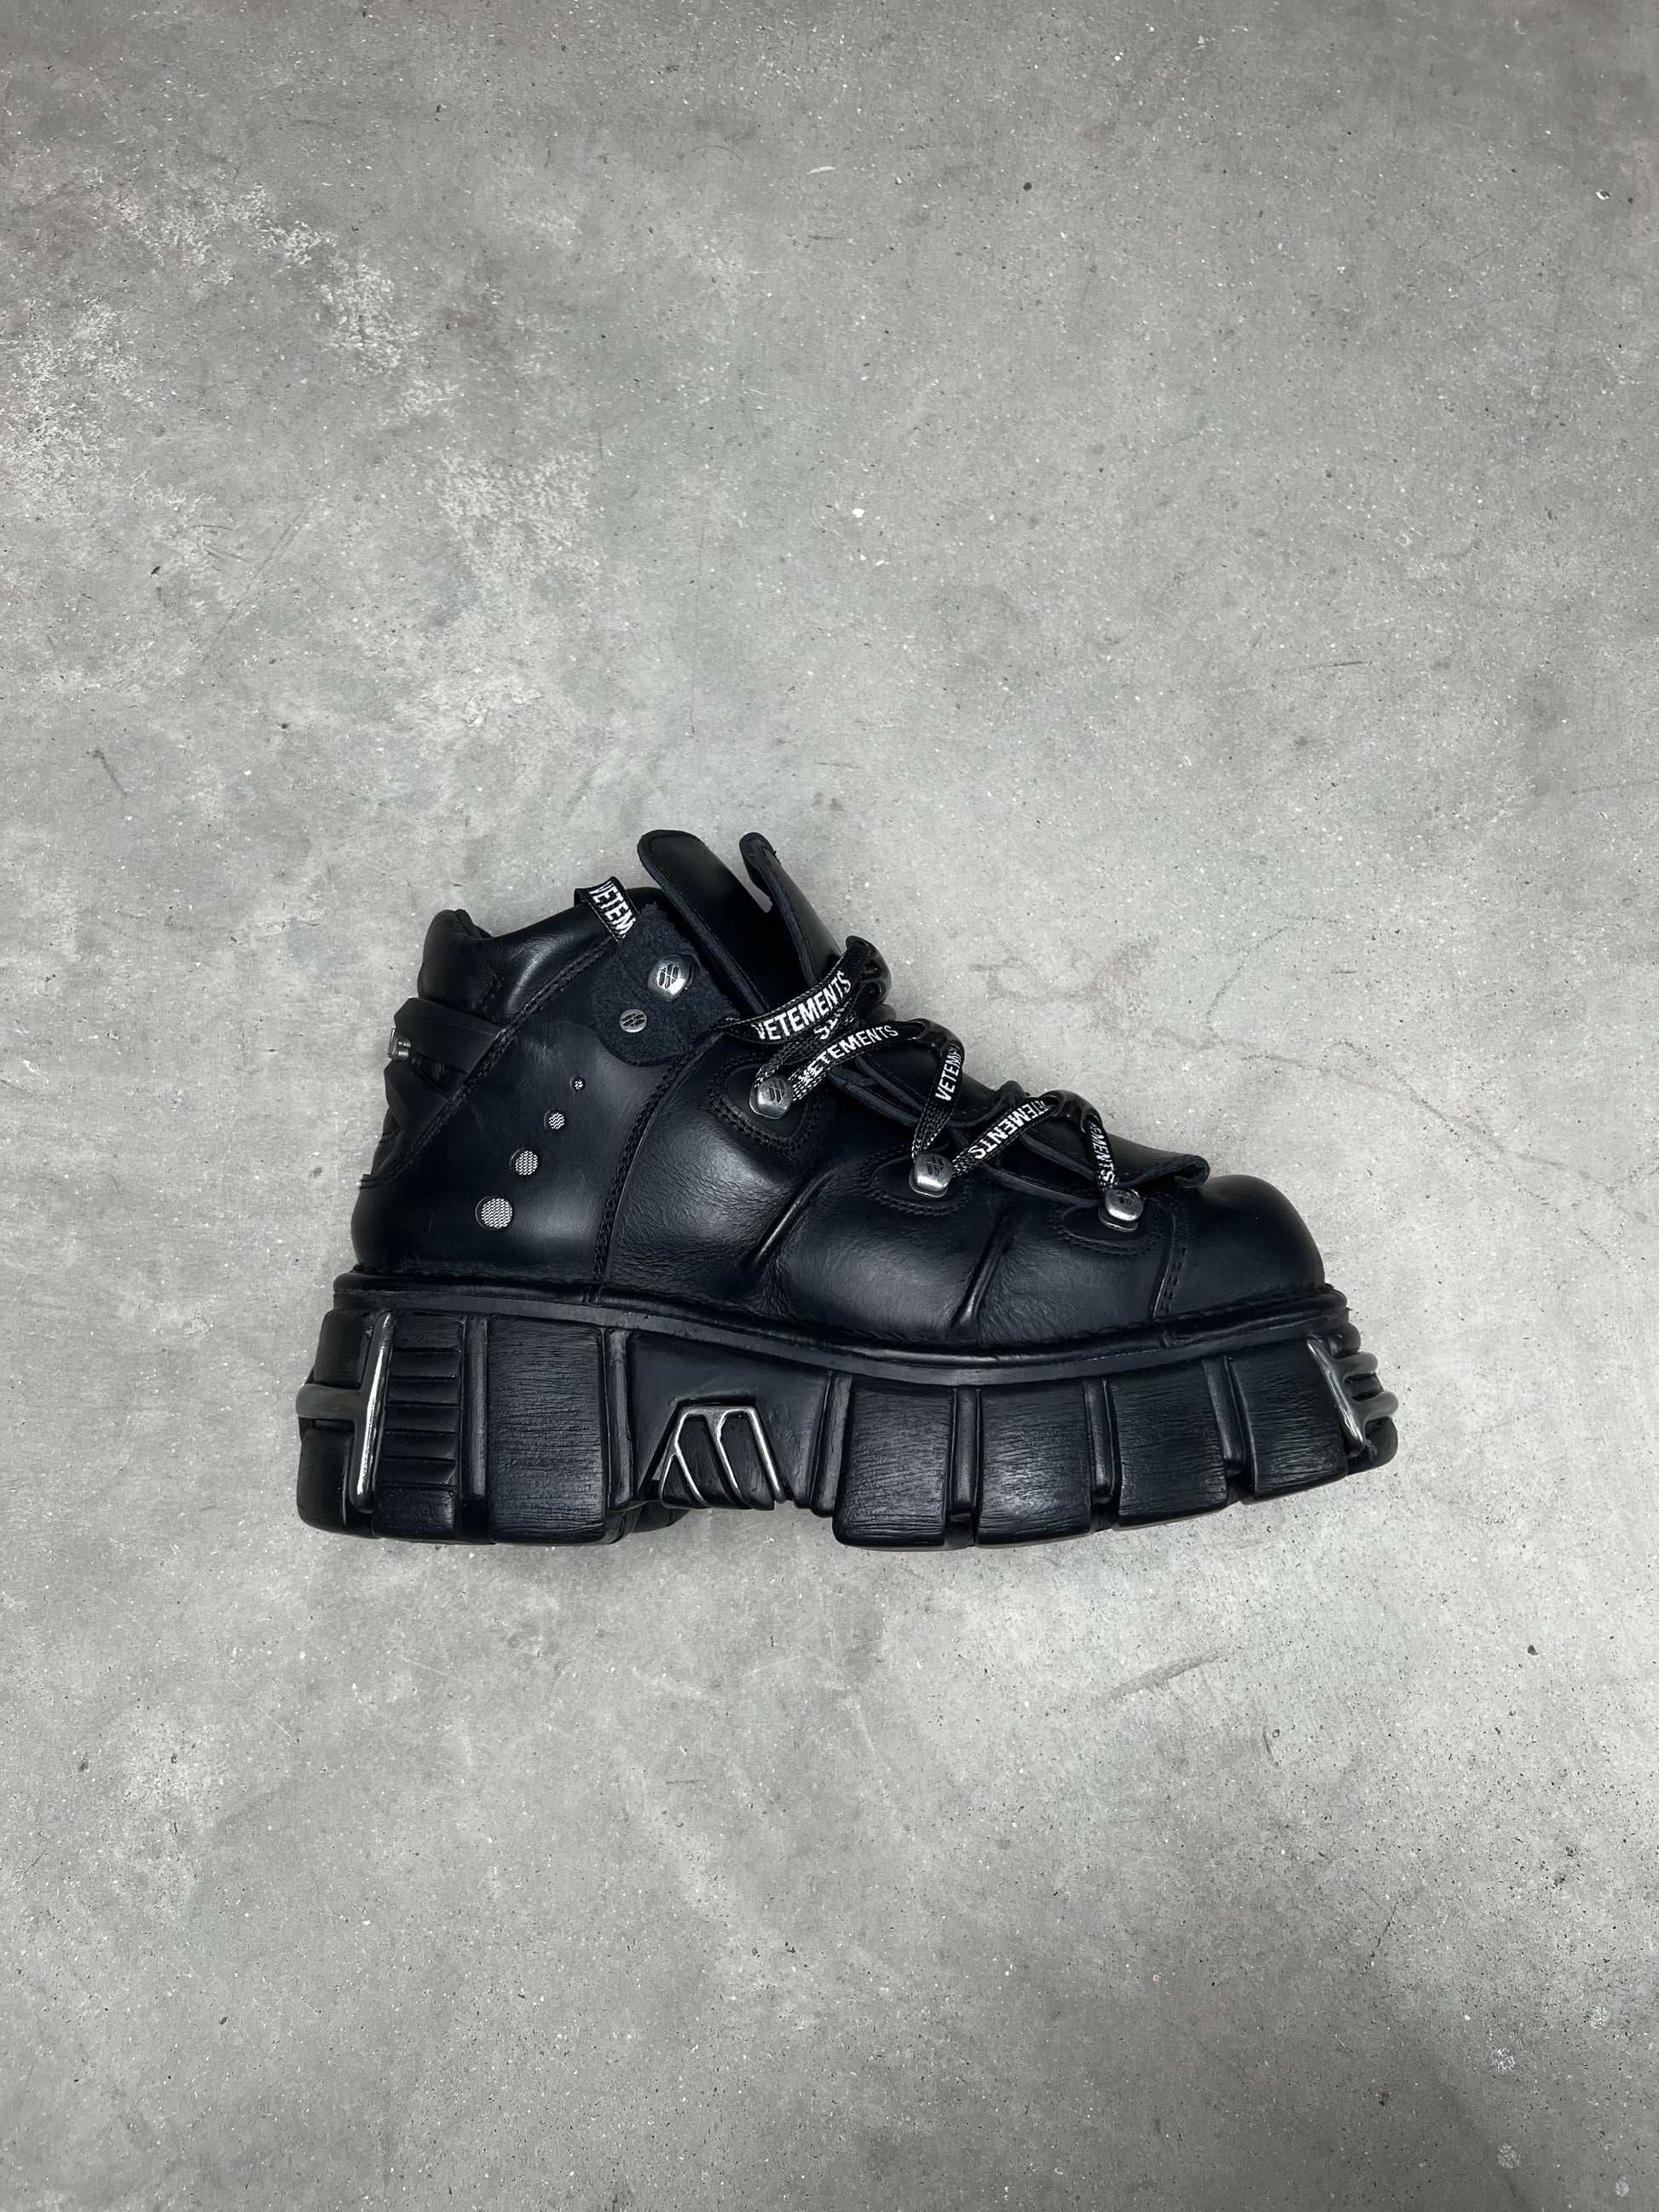 VETEMENTS x New Rock Platform Sneakers – ARCHIVE A